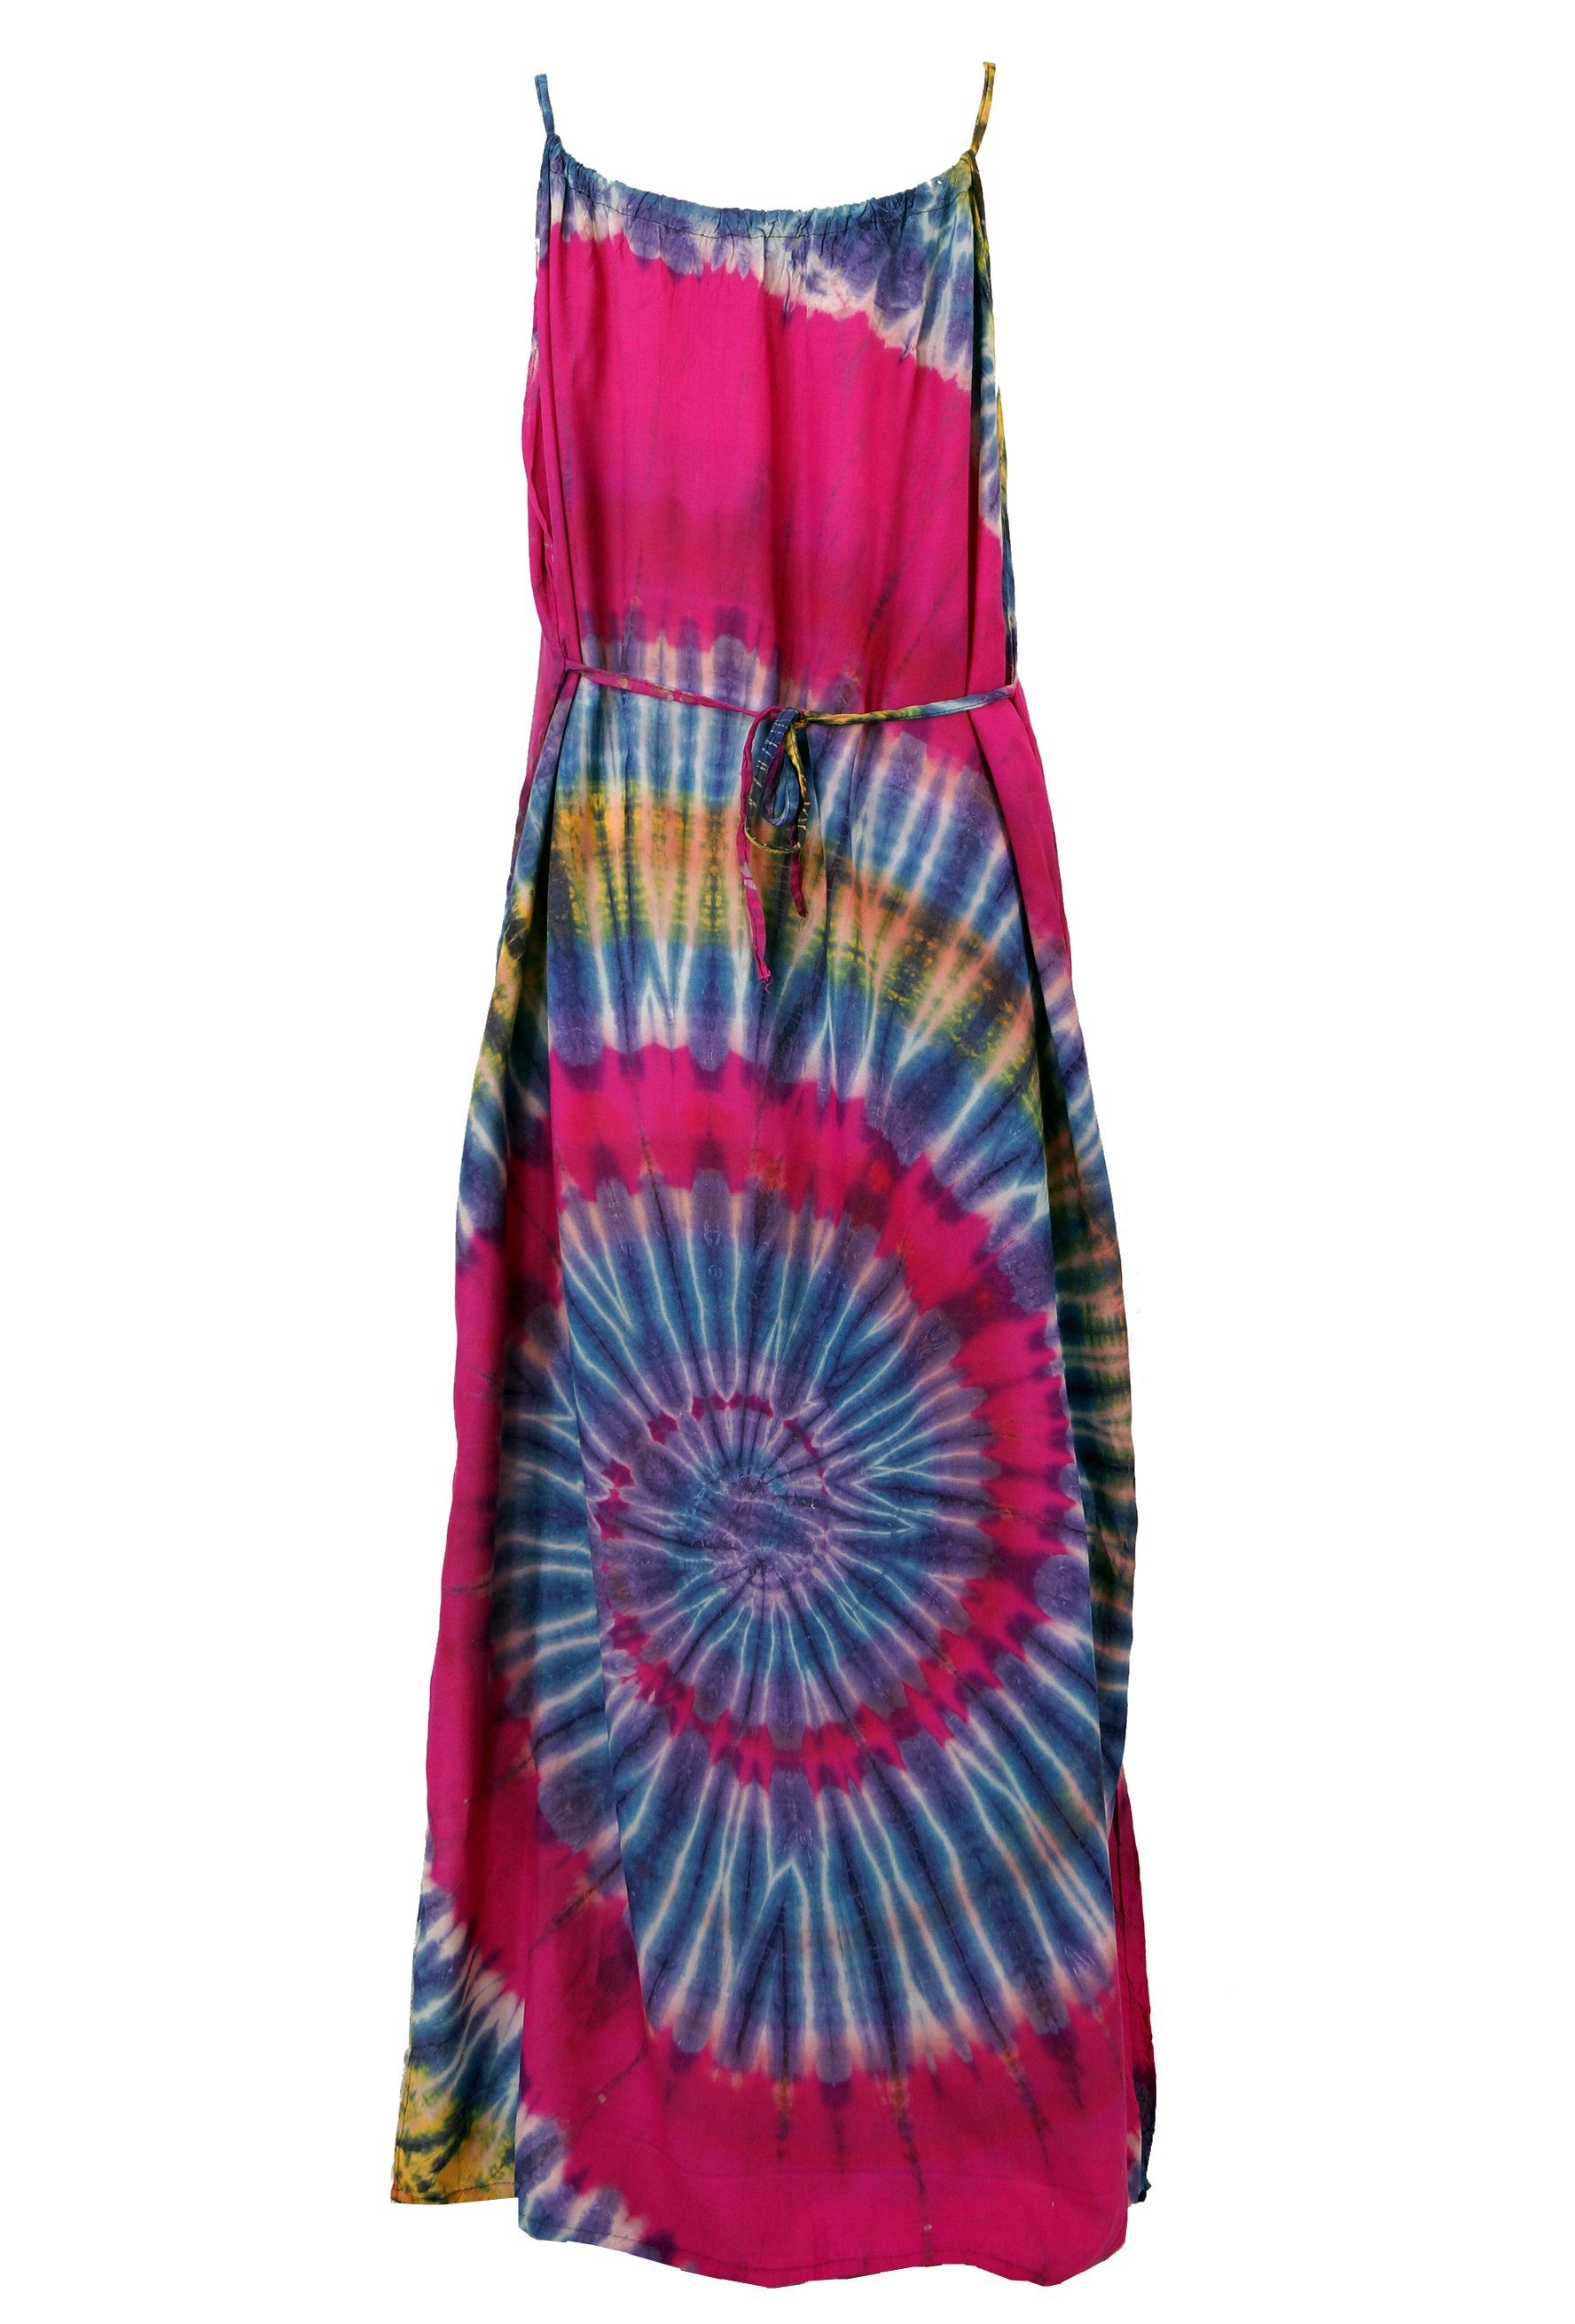 Hippiekleid, Trägerkleid,.. pink alternative Guru-Shop Batik Bekleidung Midikleid Sommerkleid,